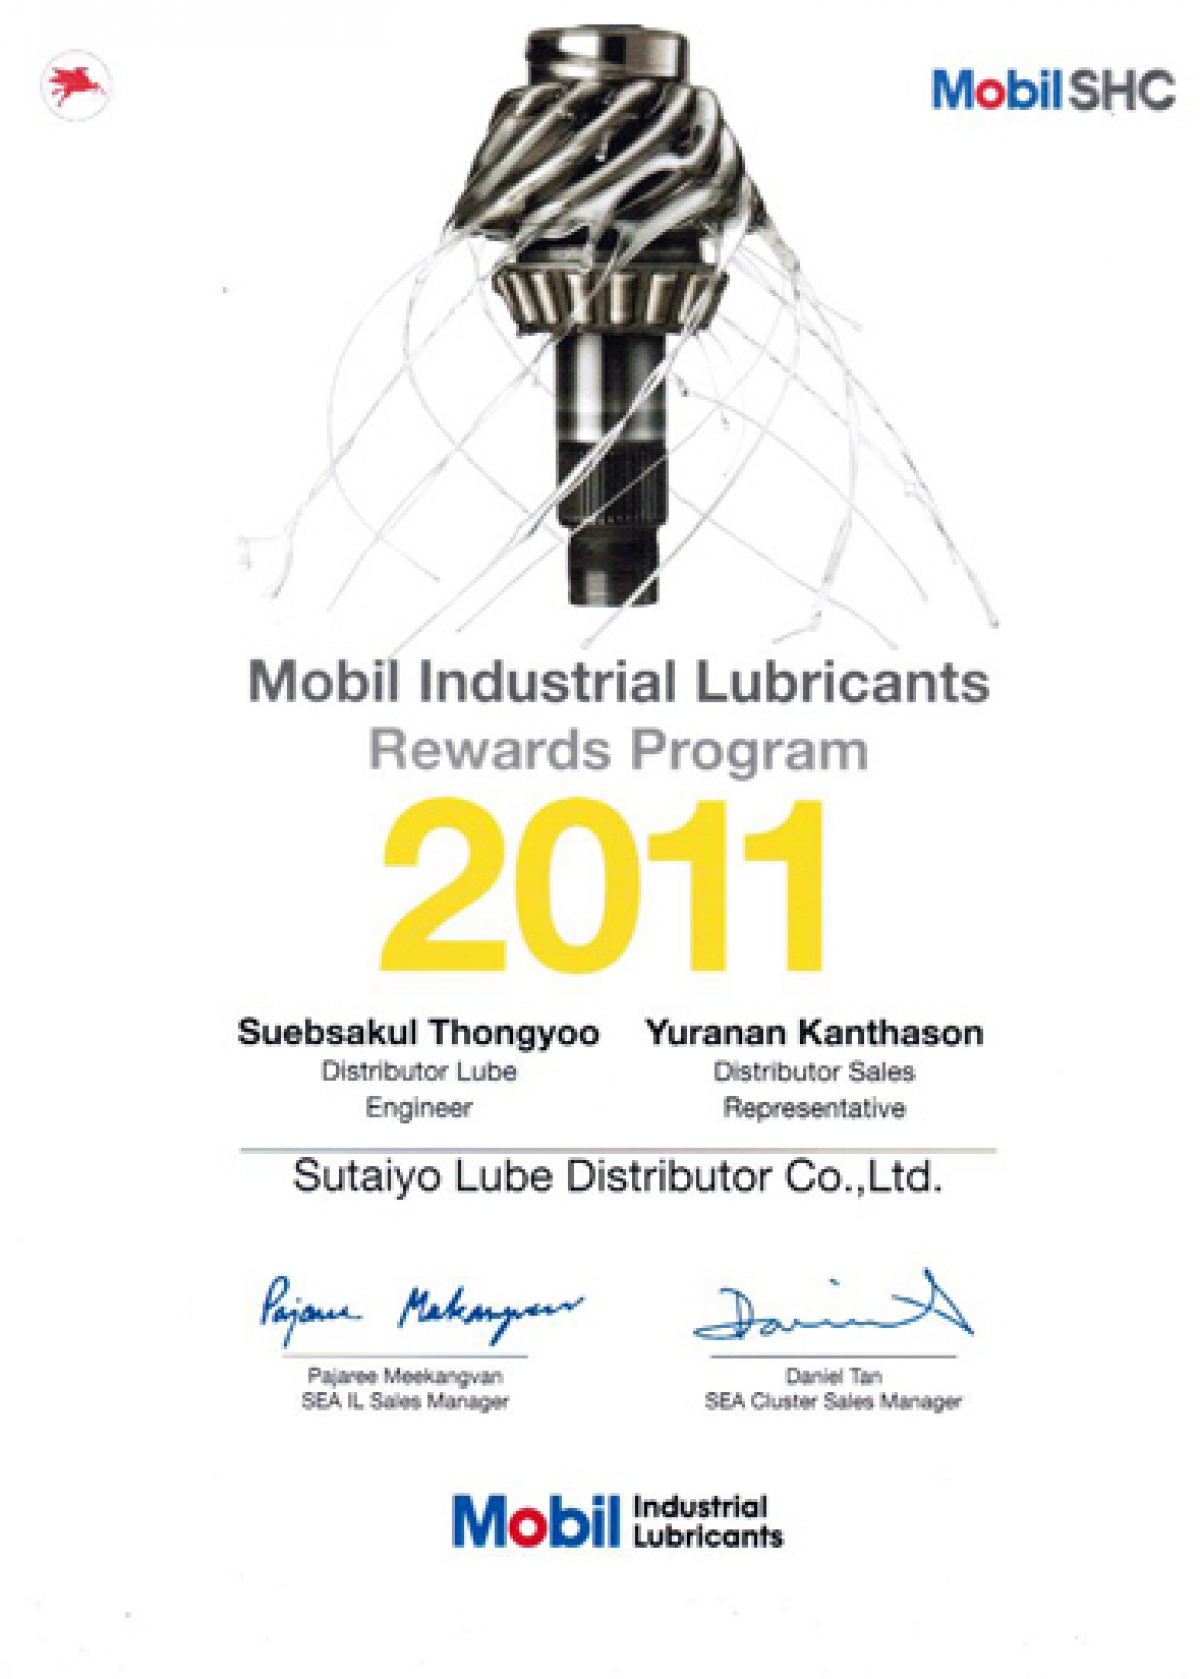 Mobil Industrial Lubricants Rewards Program